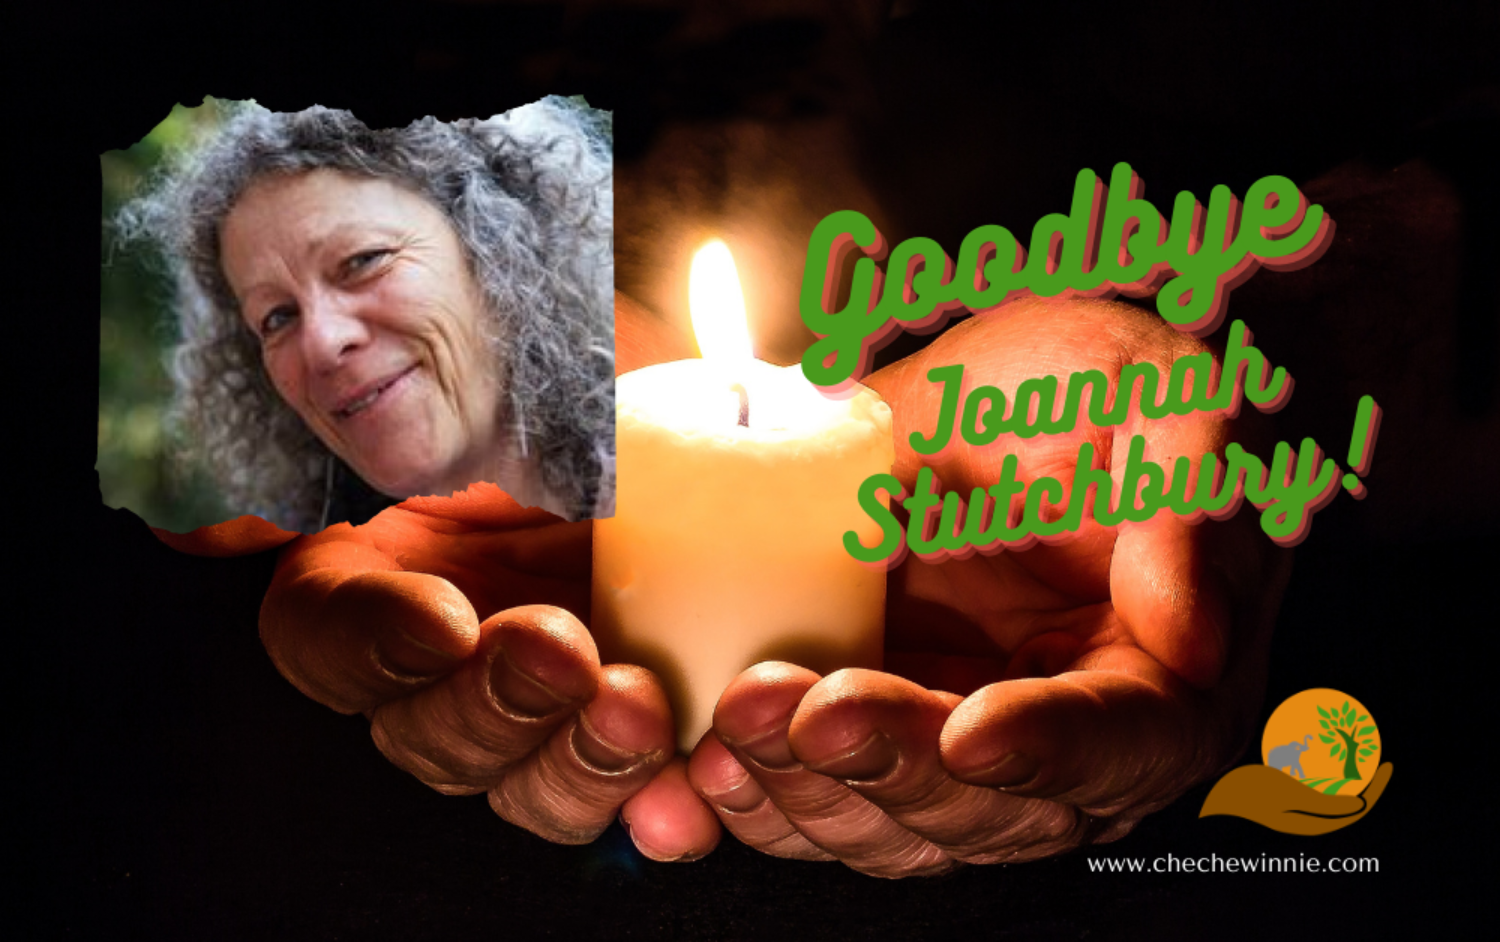 Goodbye Joannah Stutchbury